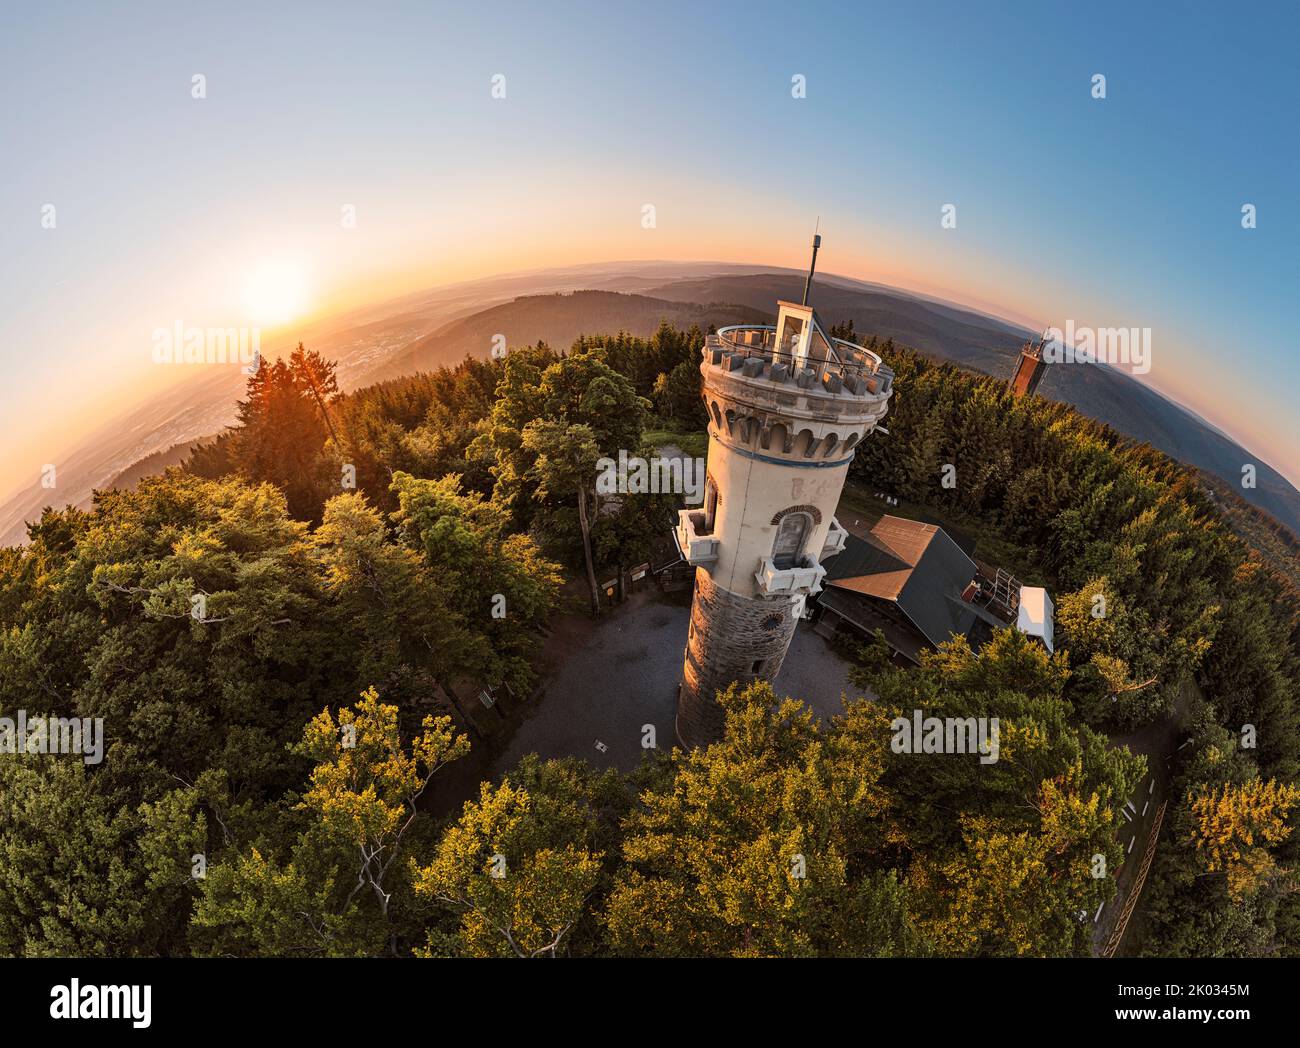 Deutschland, Thüringen, Ilmenau, Kickelhahn, Aussichtsturm, telekom Turm (Hintergrund), Sonnenaufgang, Wald, Berge, Halbkugel-Panorama Stockfoto